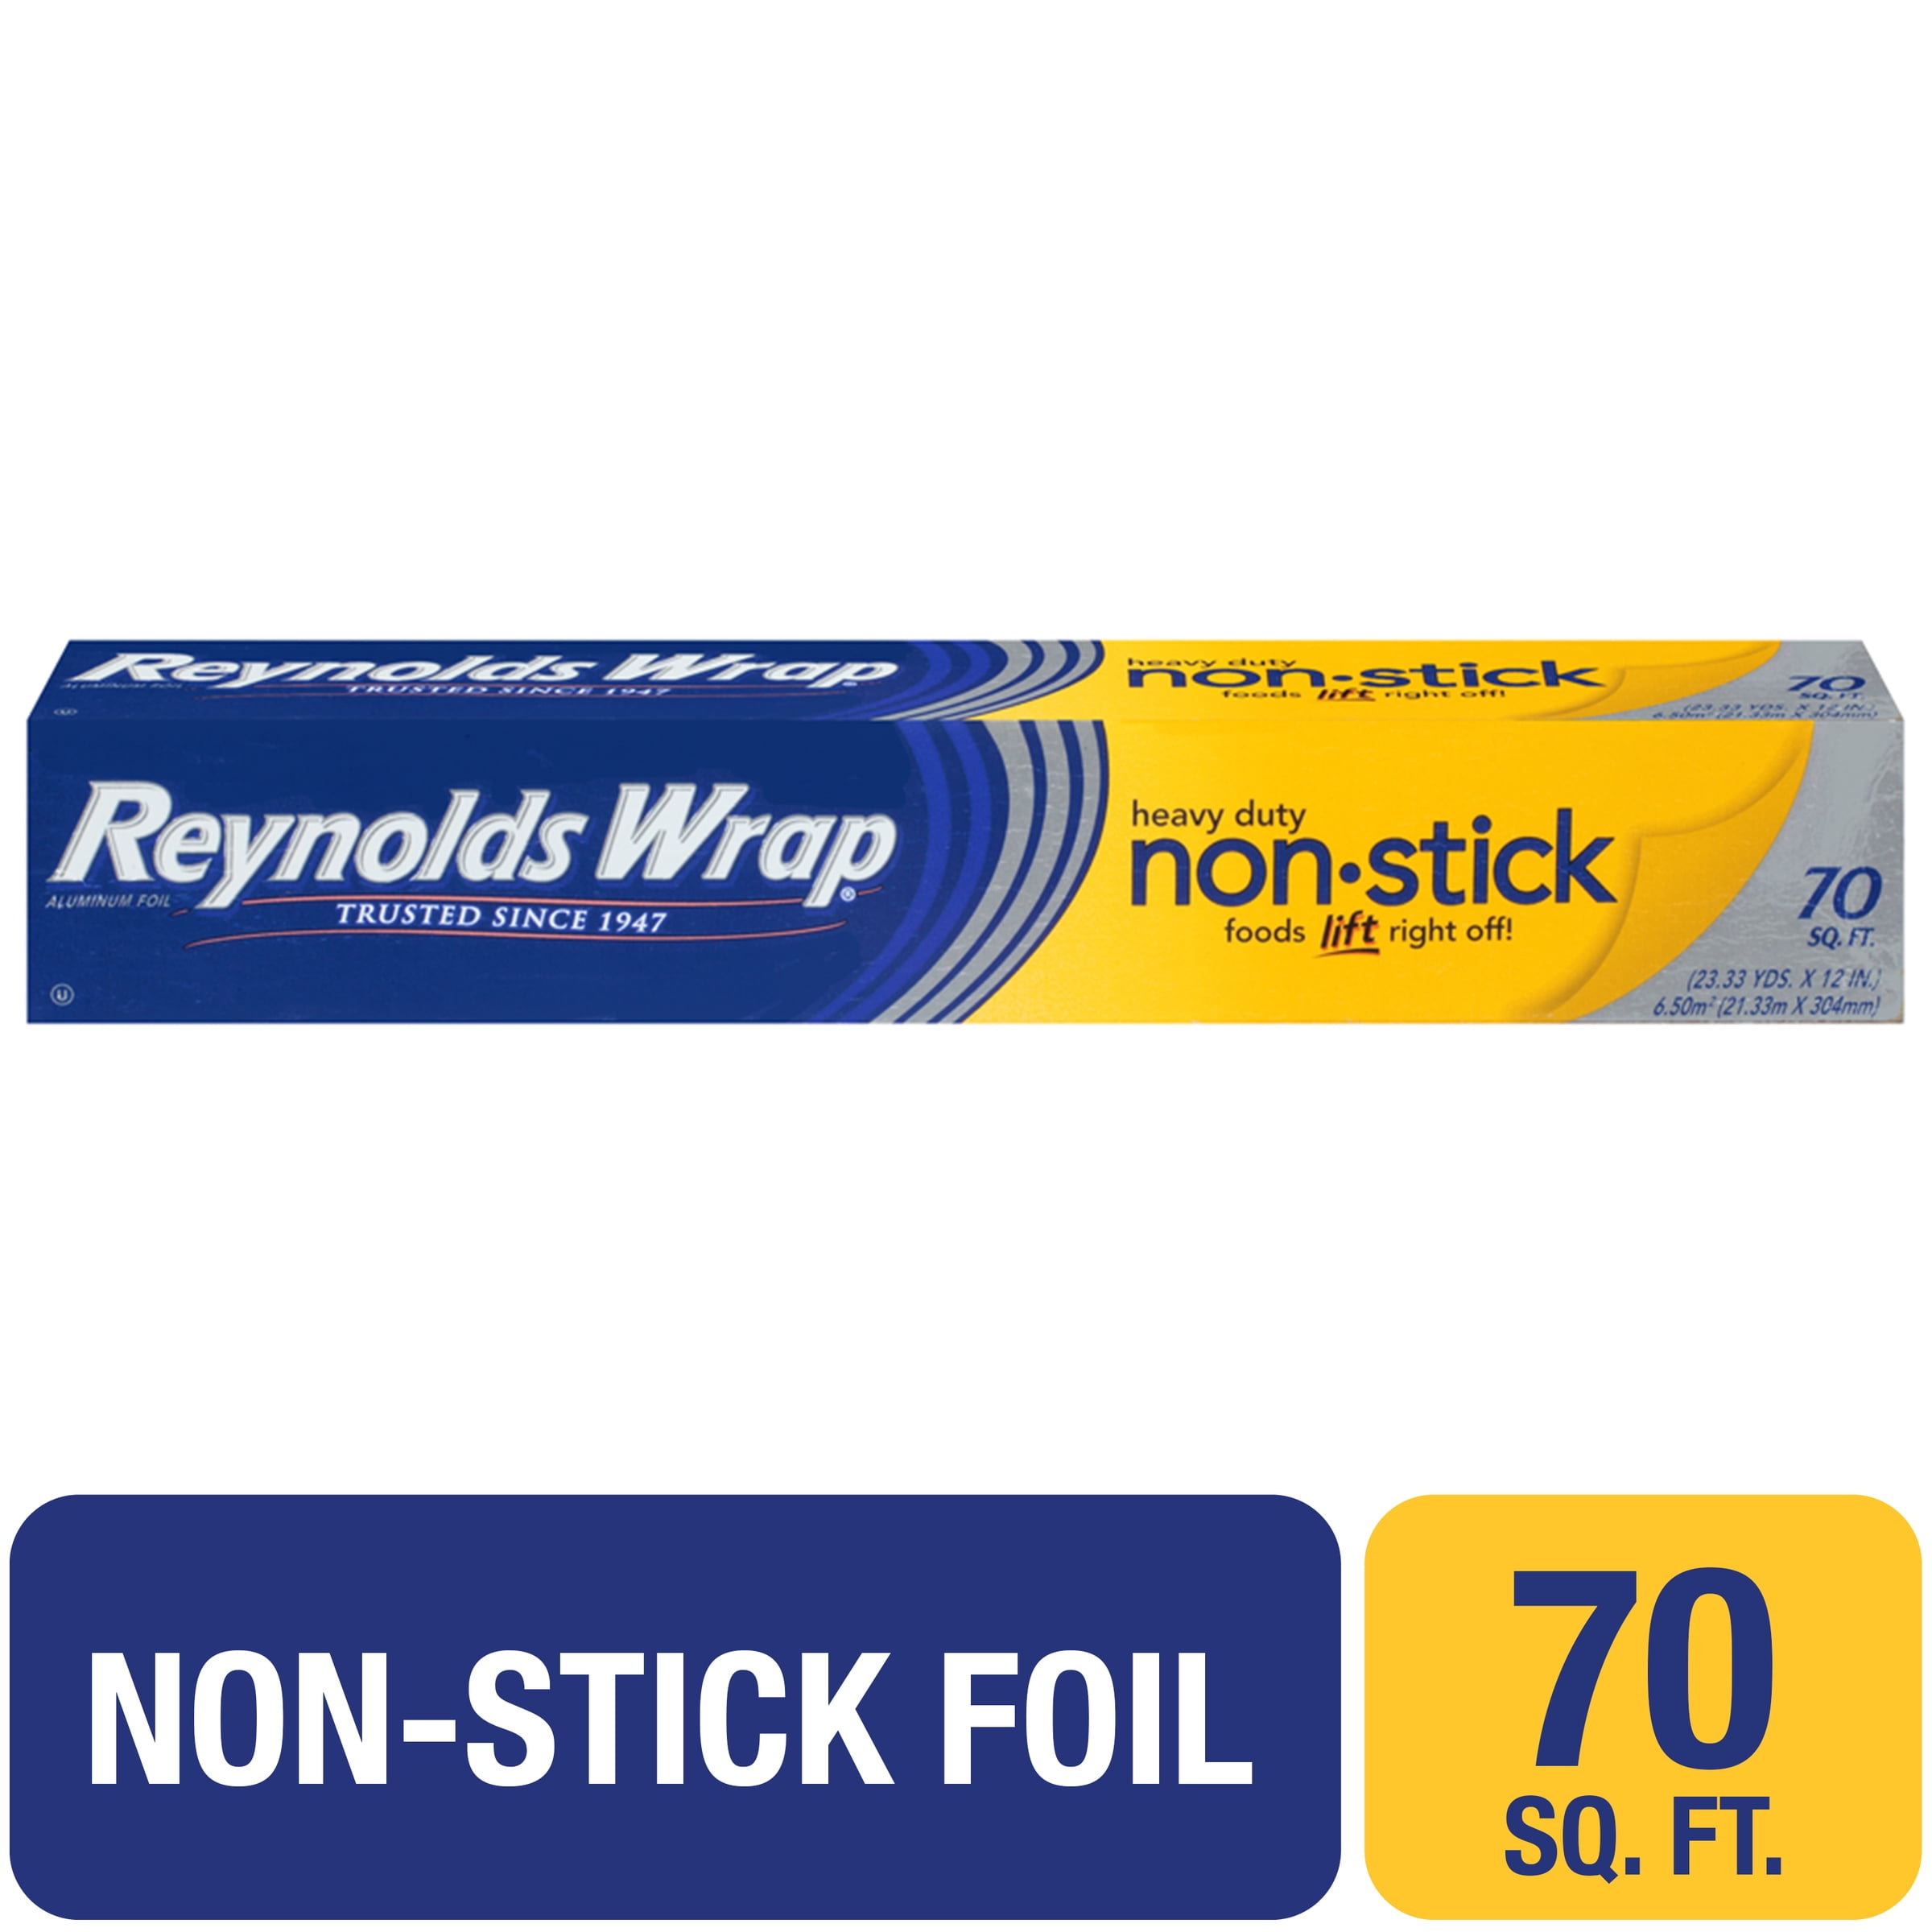 Reynolds Wrap® Heavy Duty Aluminum Foil 55 sq.ft. Box